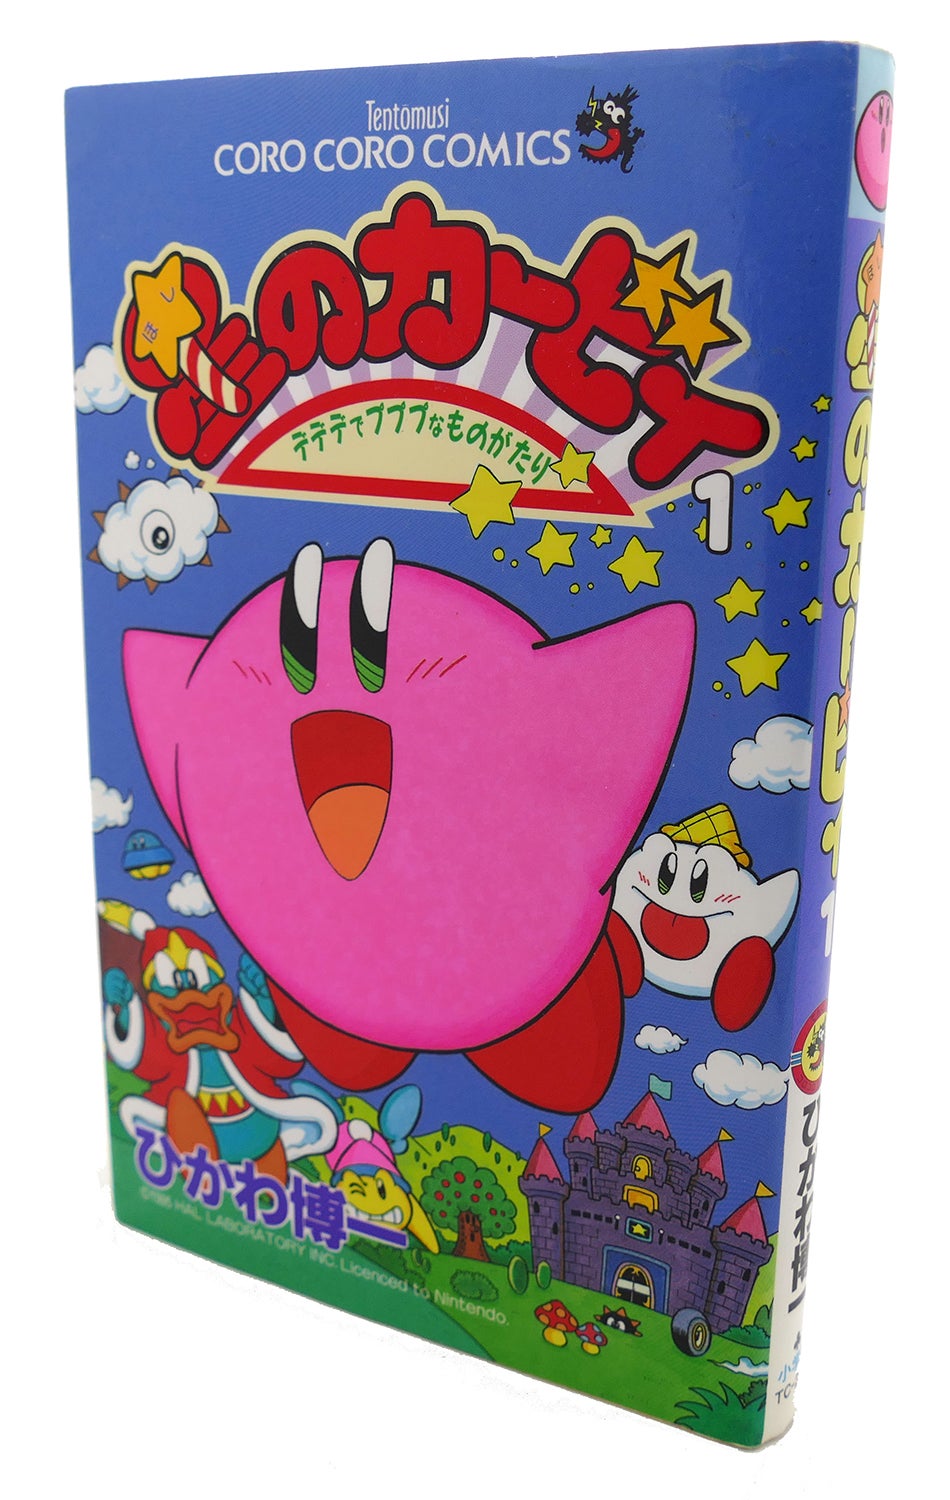 Anime girl hugs - Who likes Kirby? Characters are Kirby from Kirby and  Misono Karin from the Mahou Shoujo Madoka Majica series  https://danbooru.donmai.us/posts/3595820?q=hug -Maelstrom | Facebook